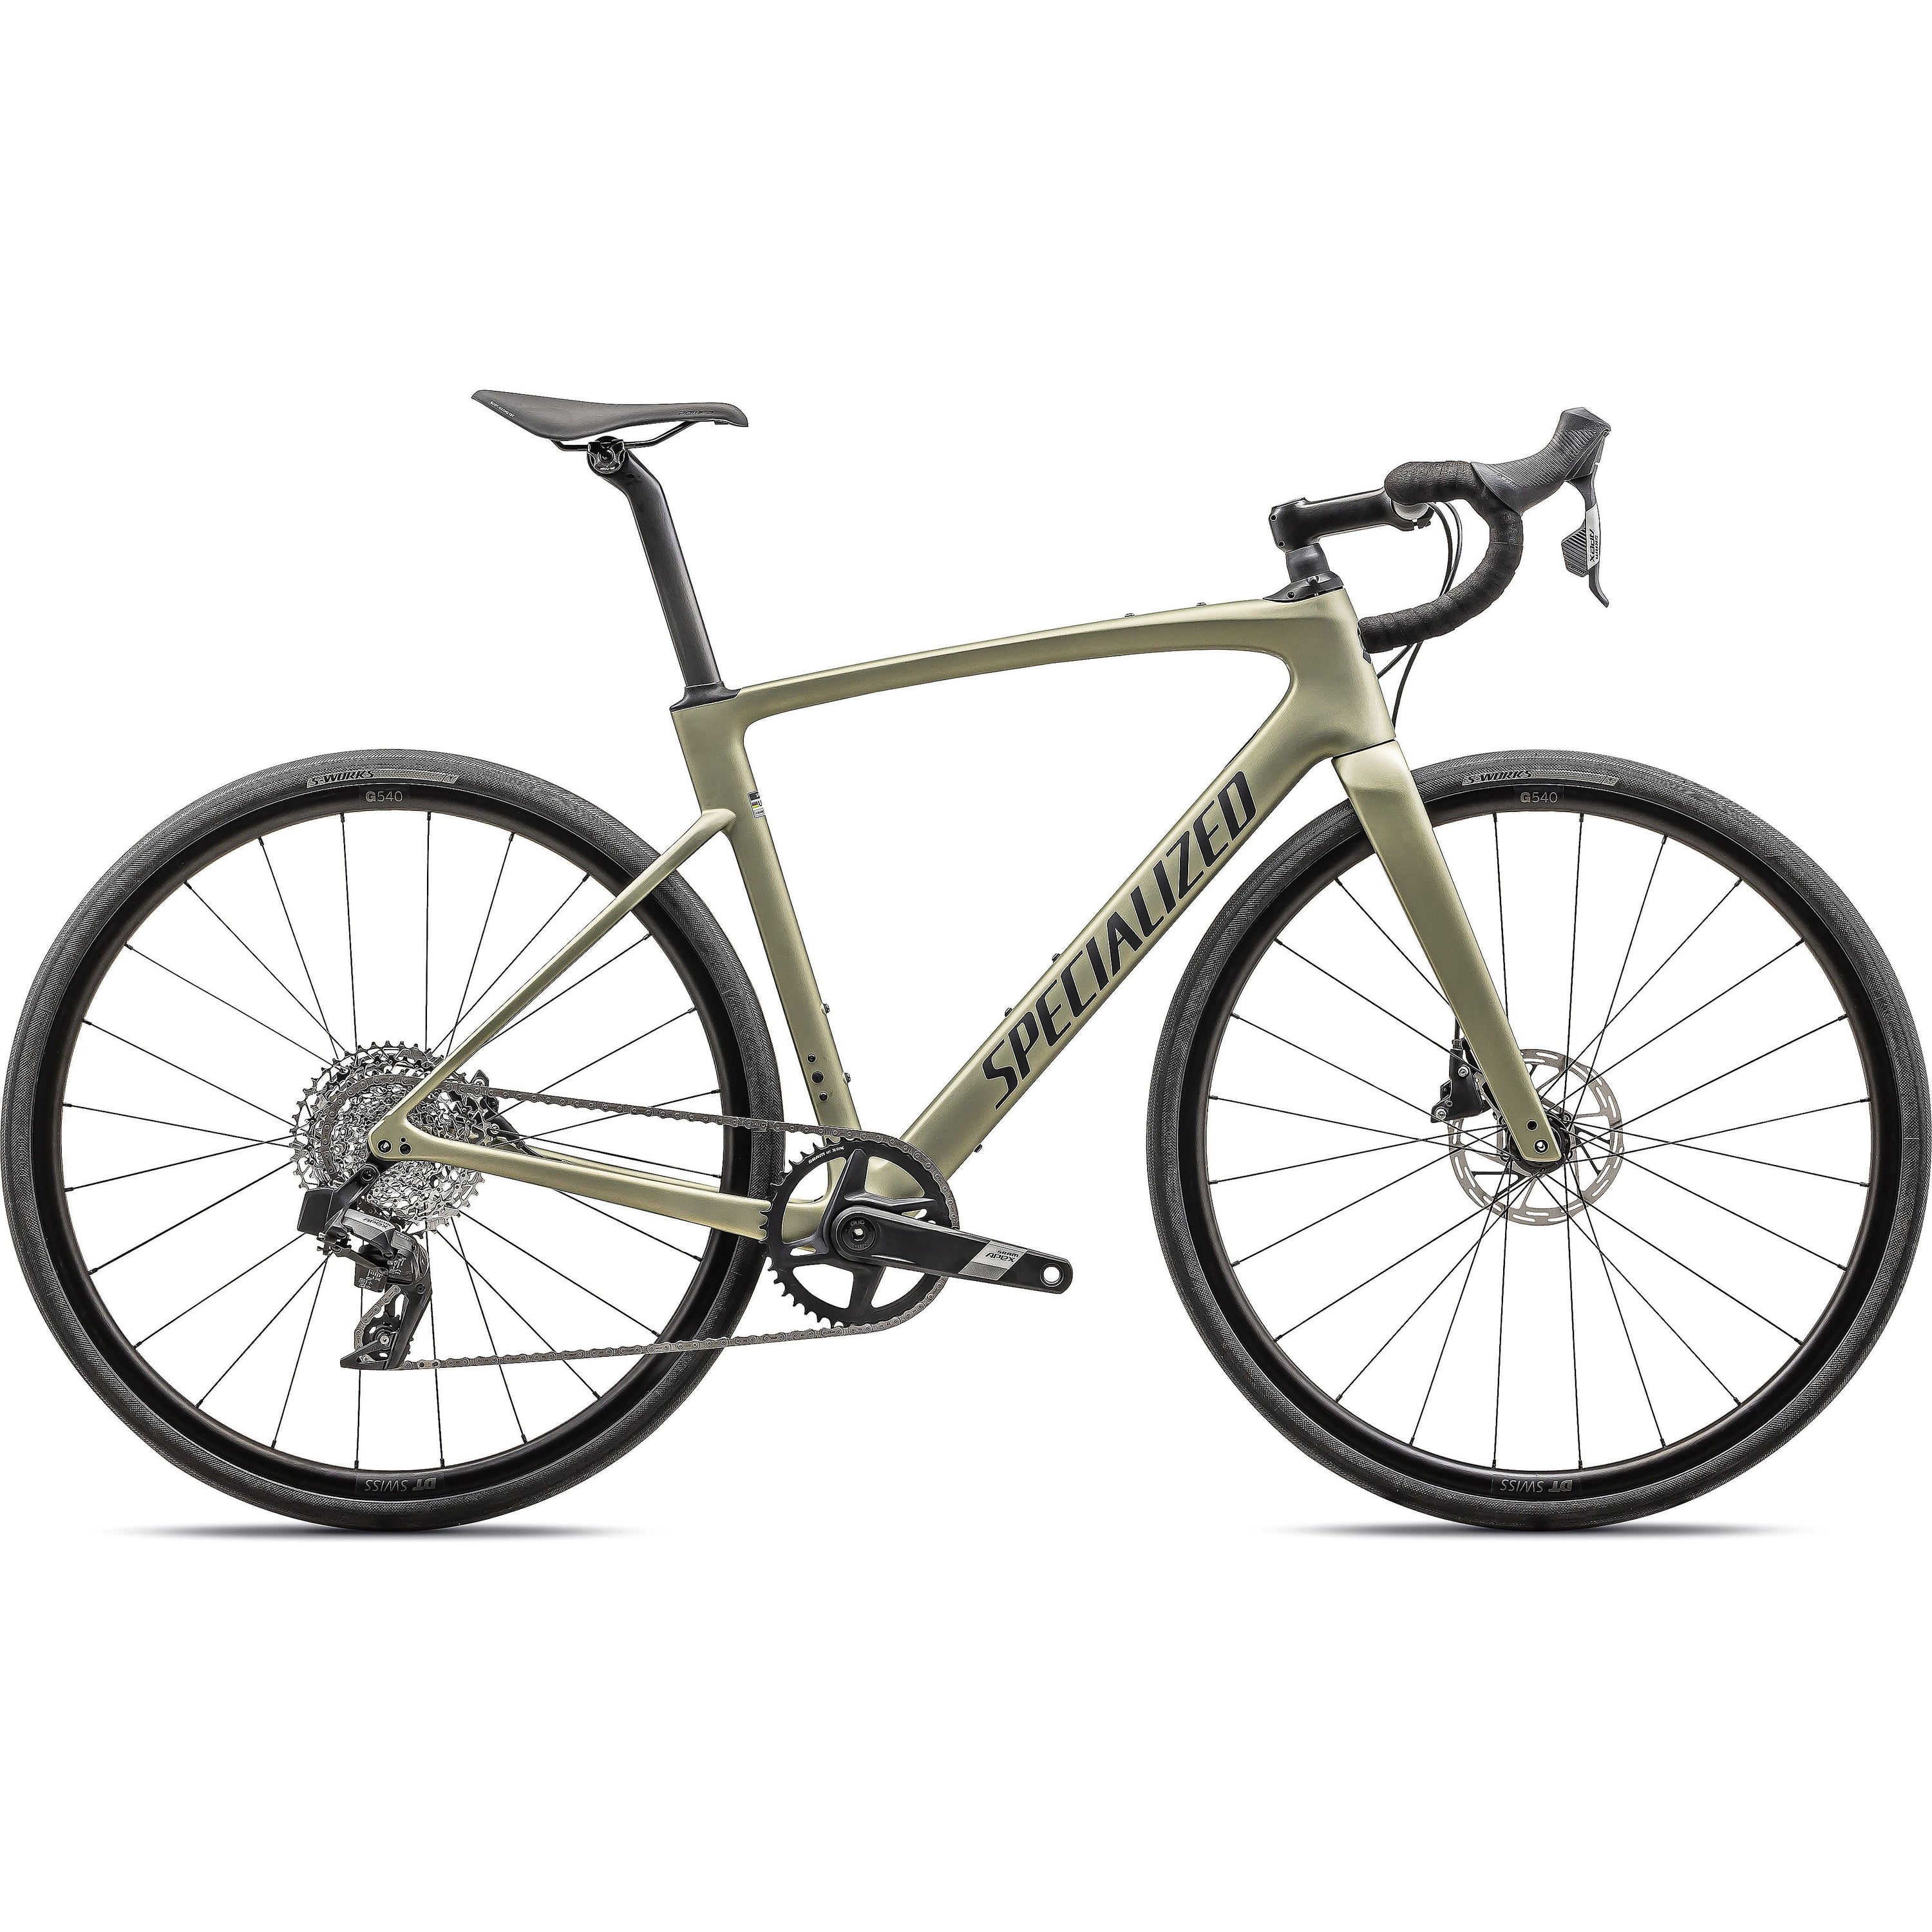 Specialized Roubaix SL8 Sport Apex bike - Metallic Spruce / Forest Green